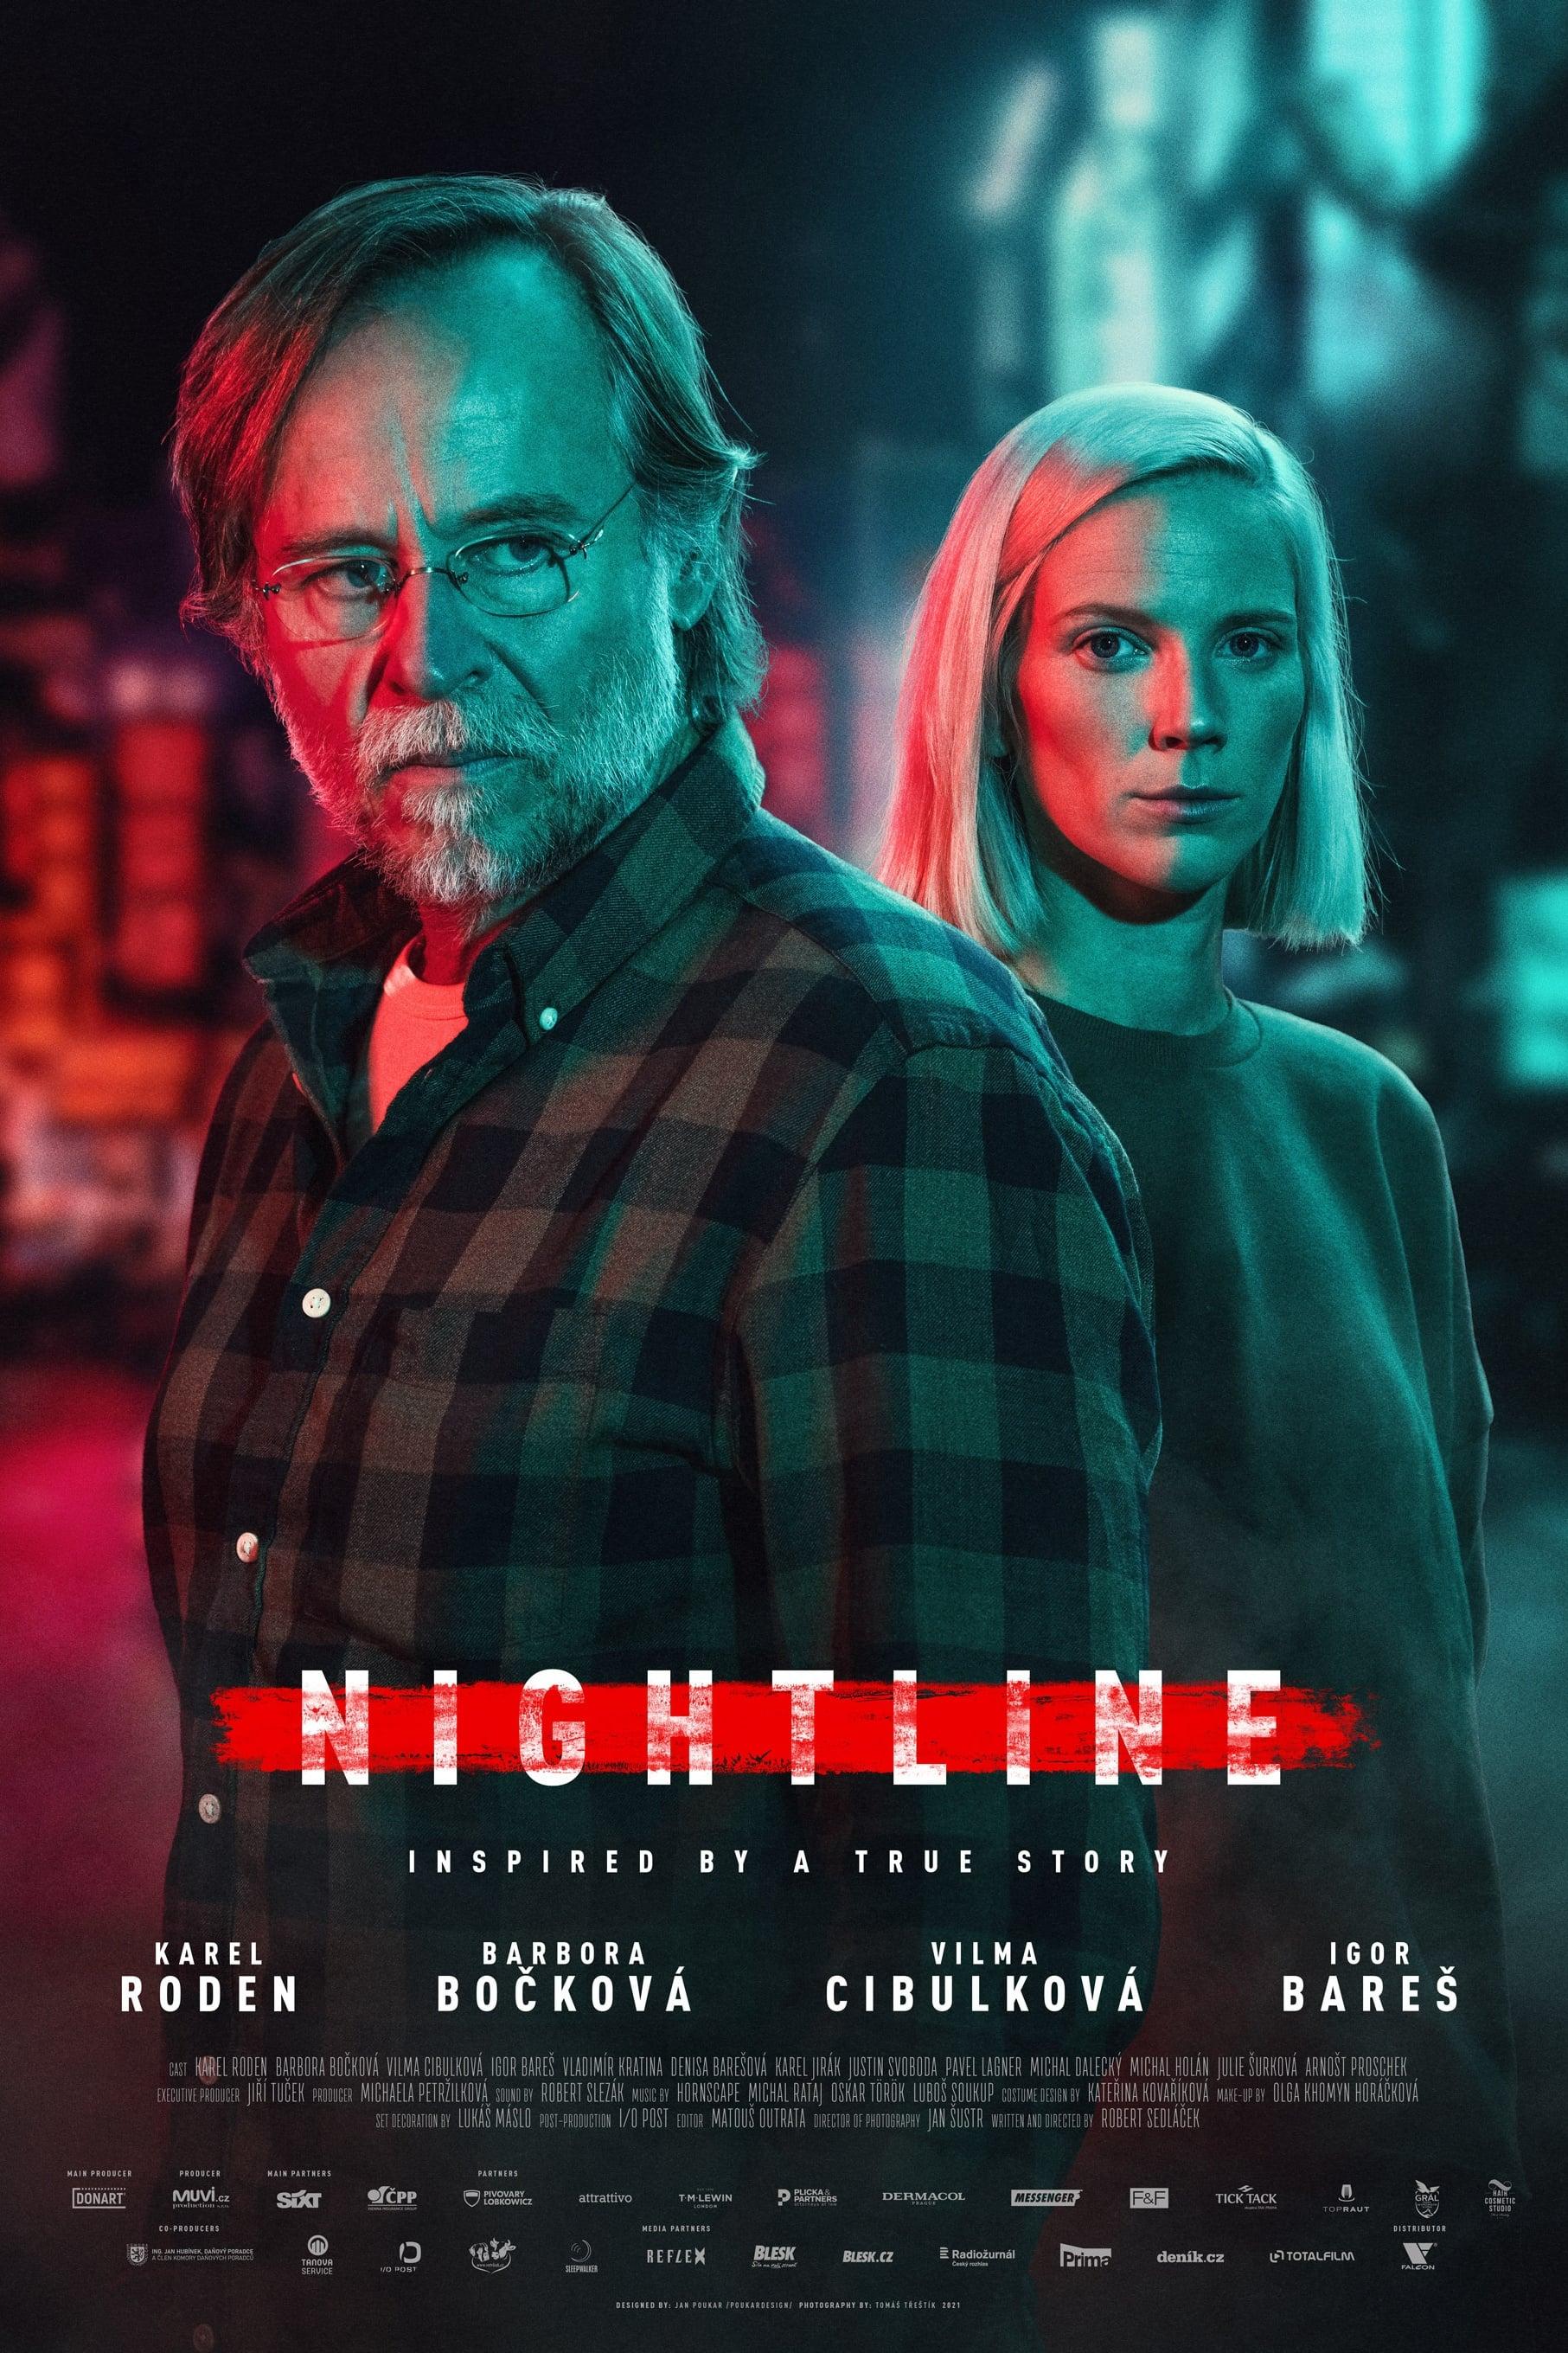 Nightline poster